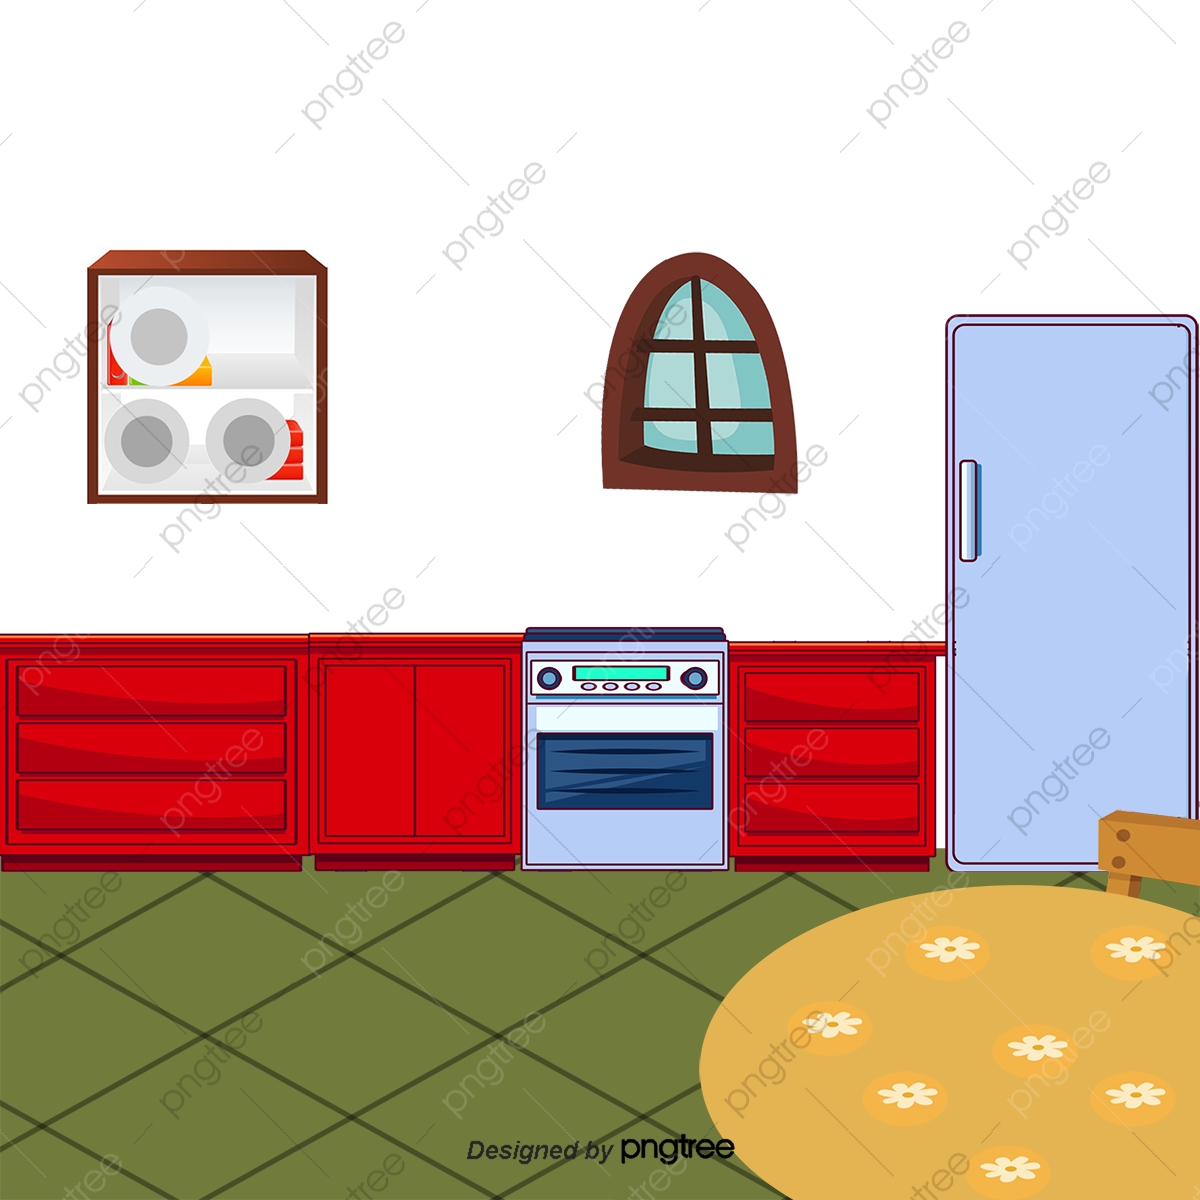 refrigerator clipart house kitchen